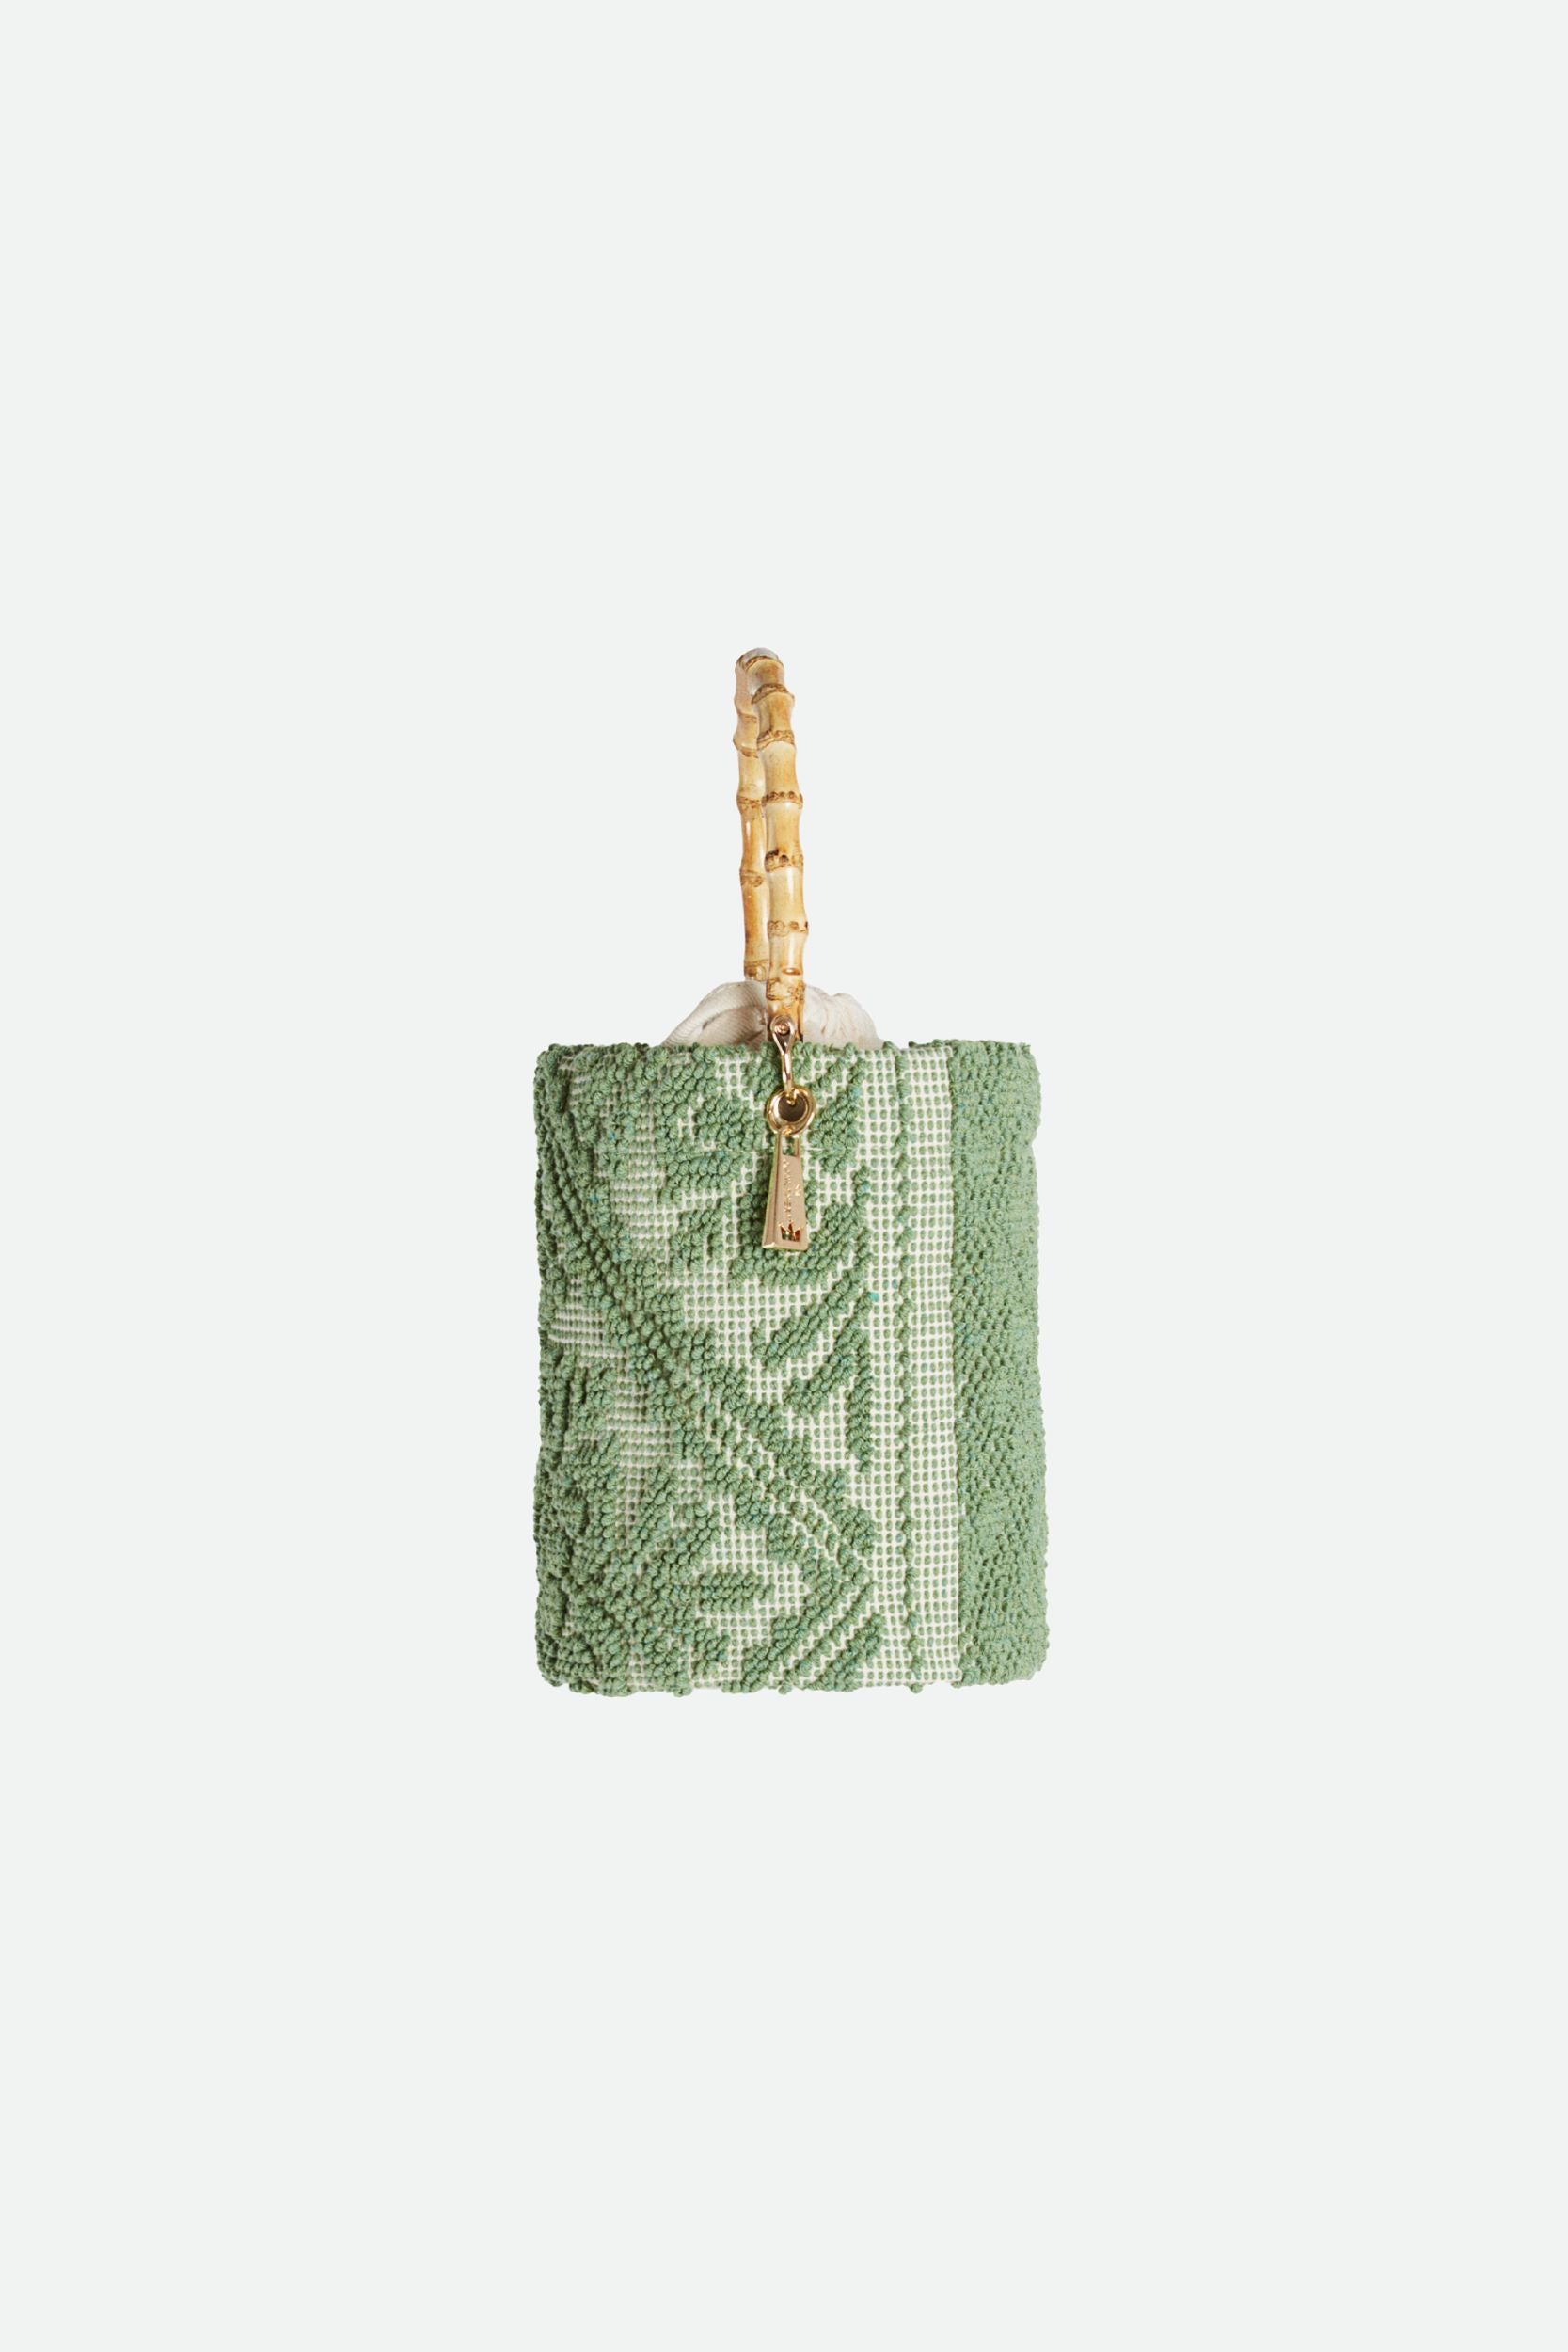 La Milanesa Green Chia Bag